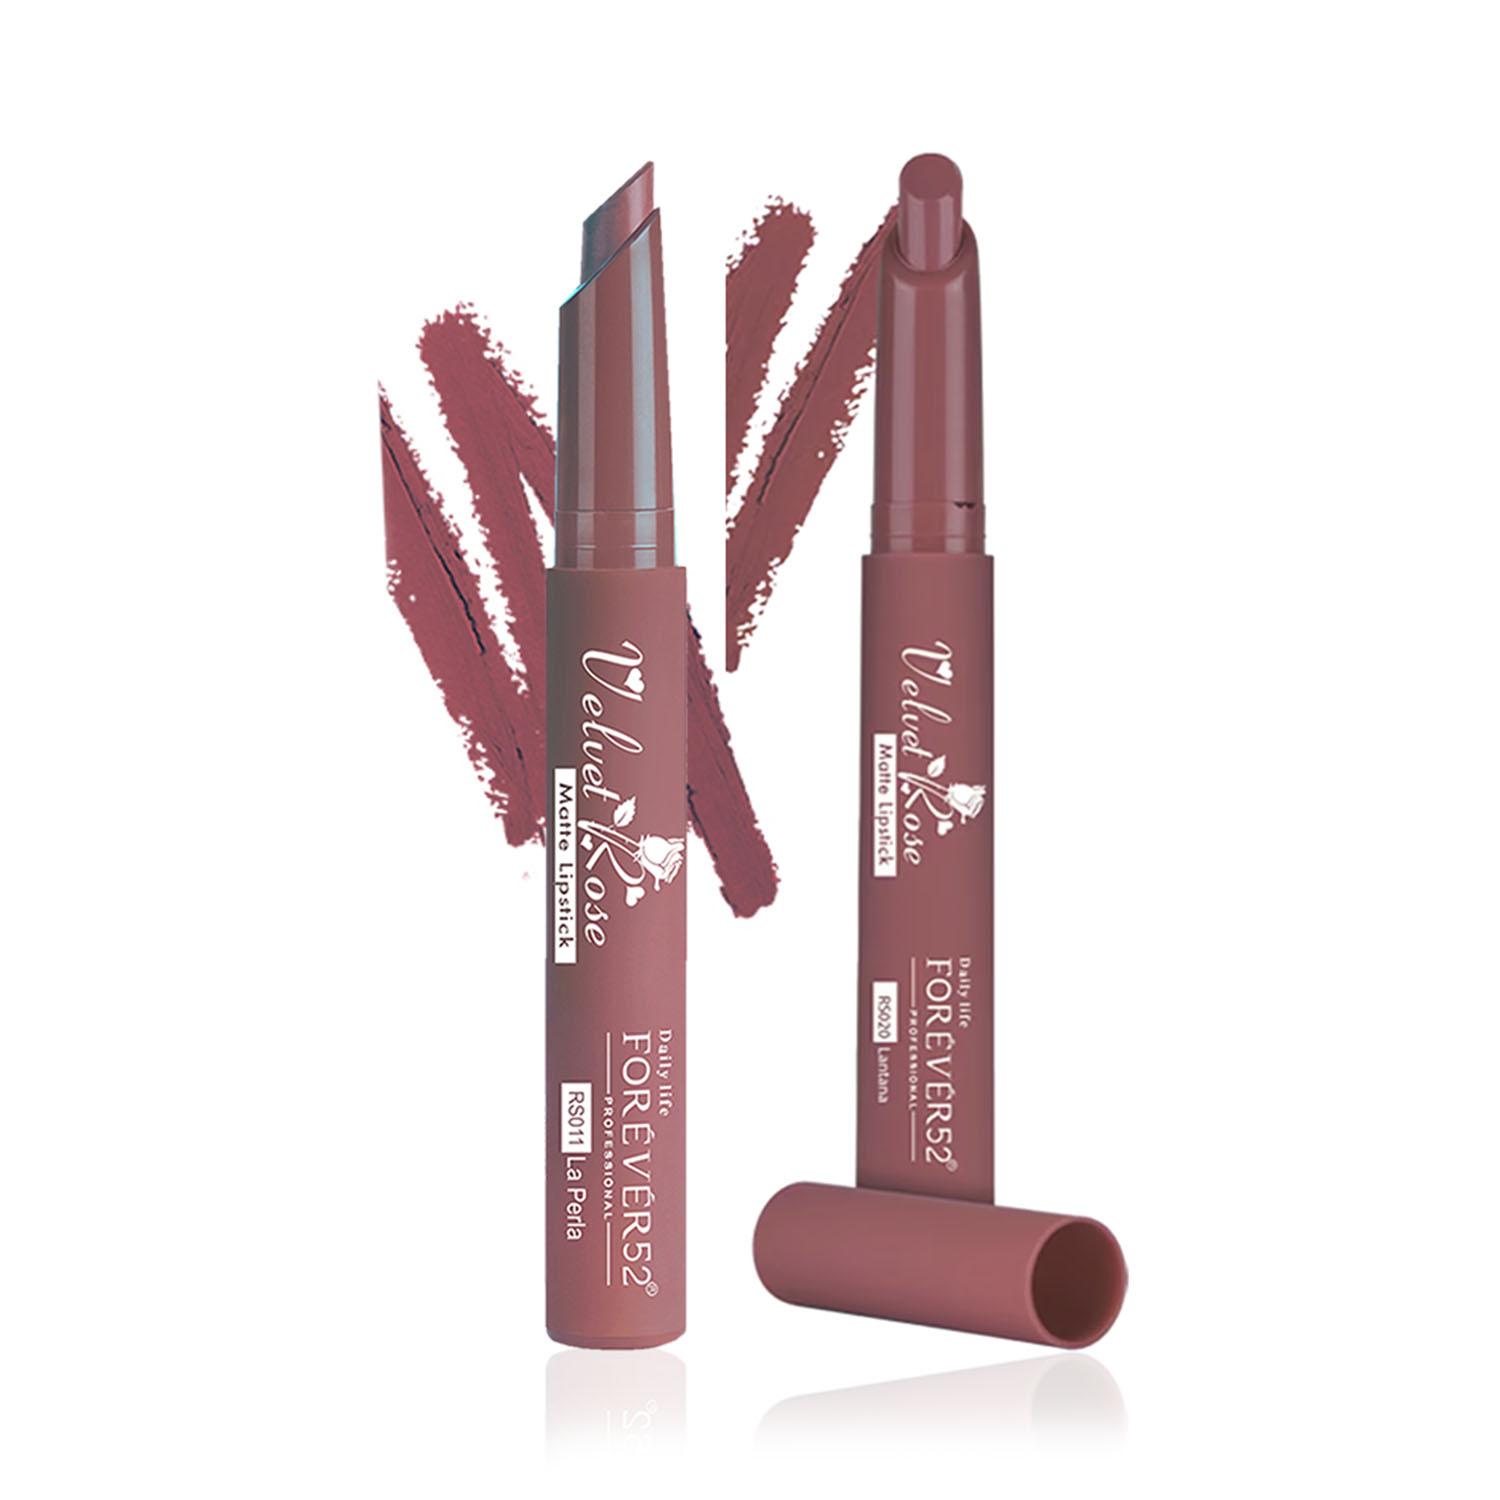 Daily Life Forever52 Velvet Rose Matte Lipstick Set of 2 Crayons Combo (La Perla,Latana)